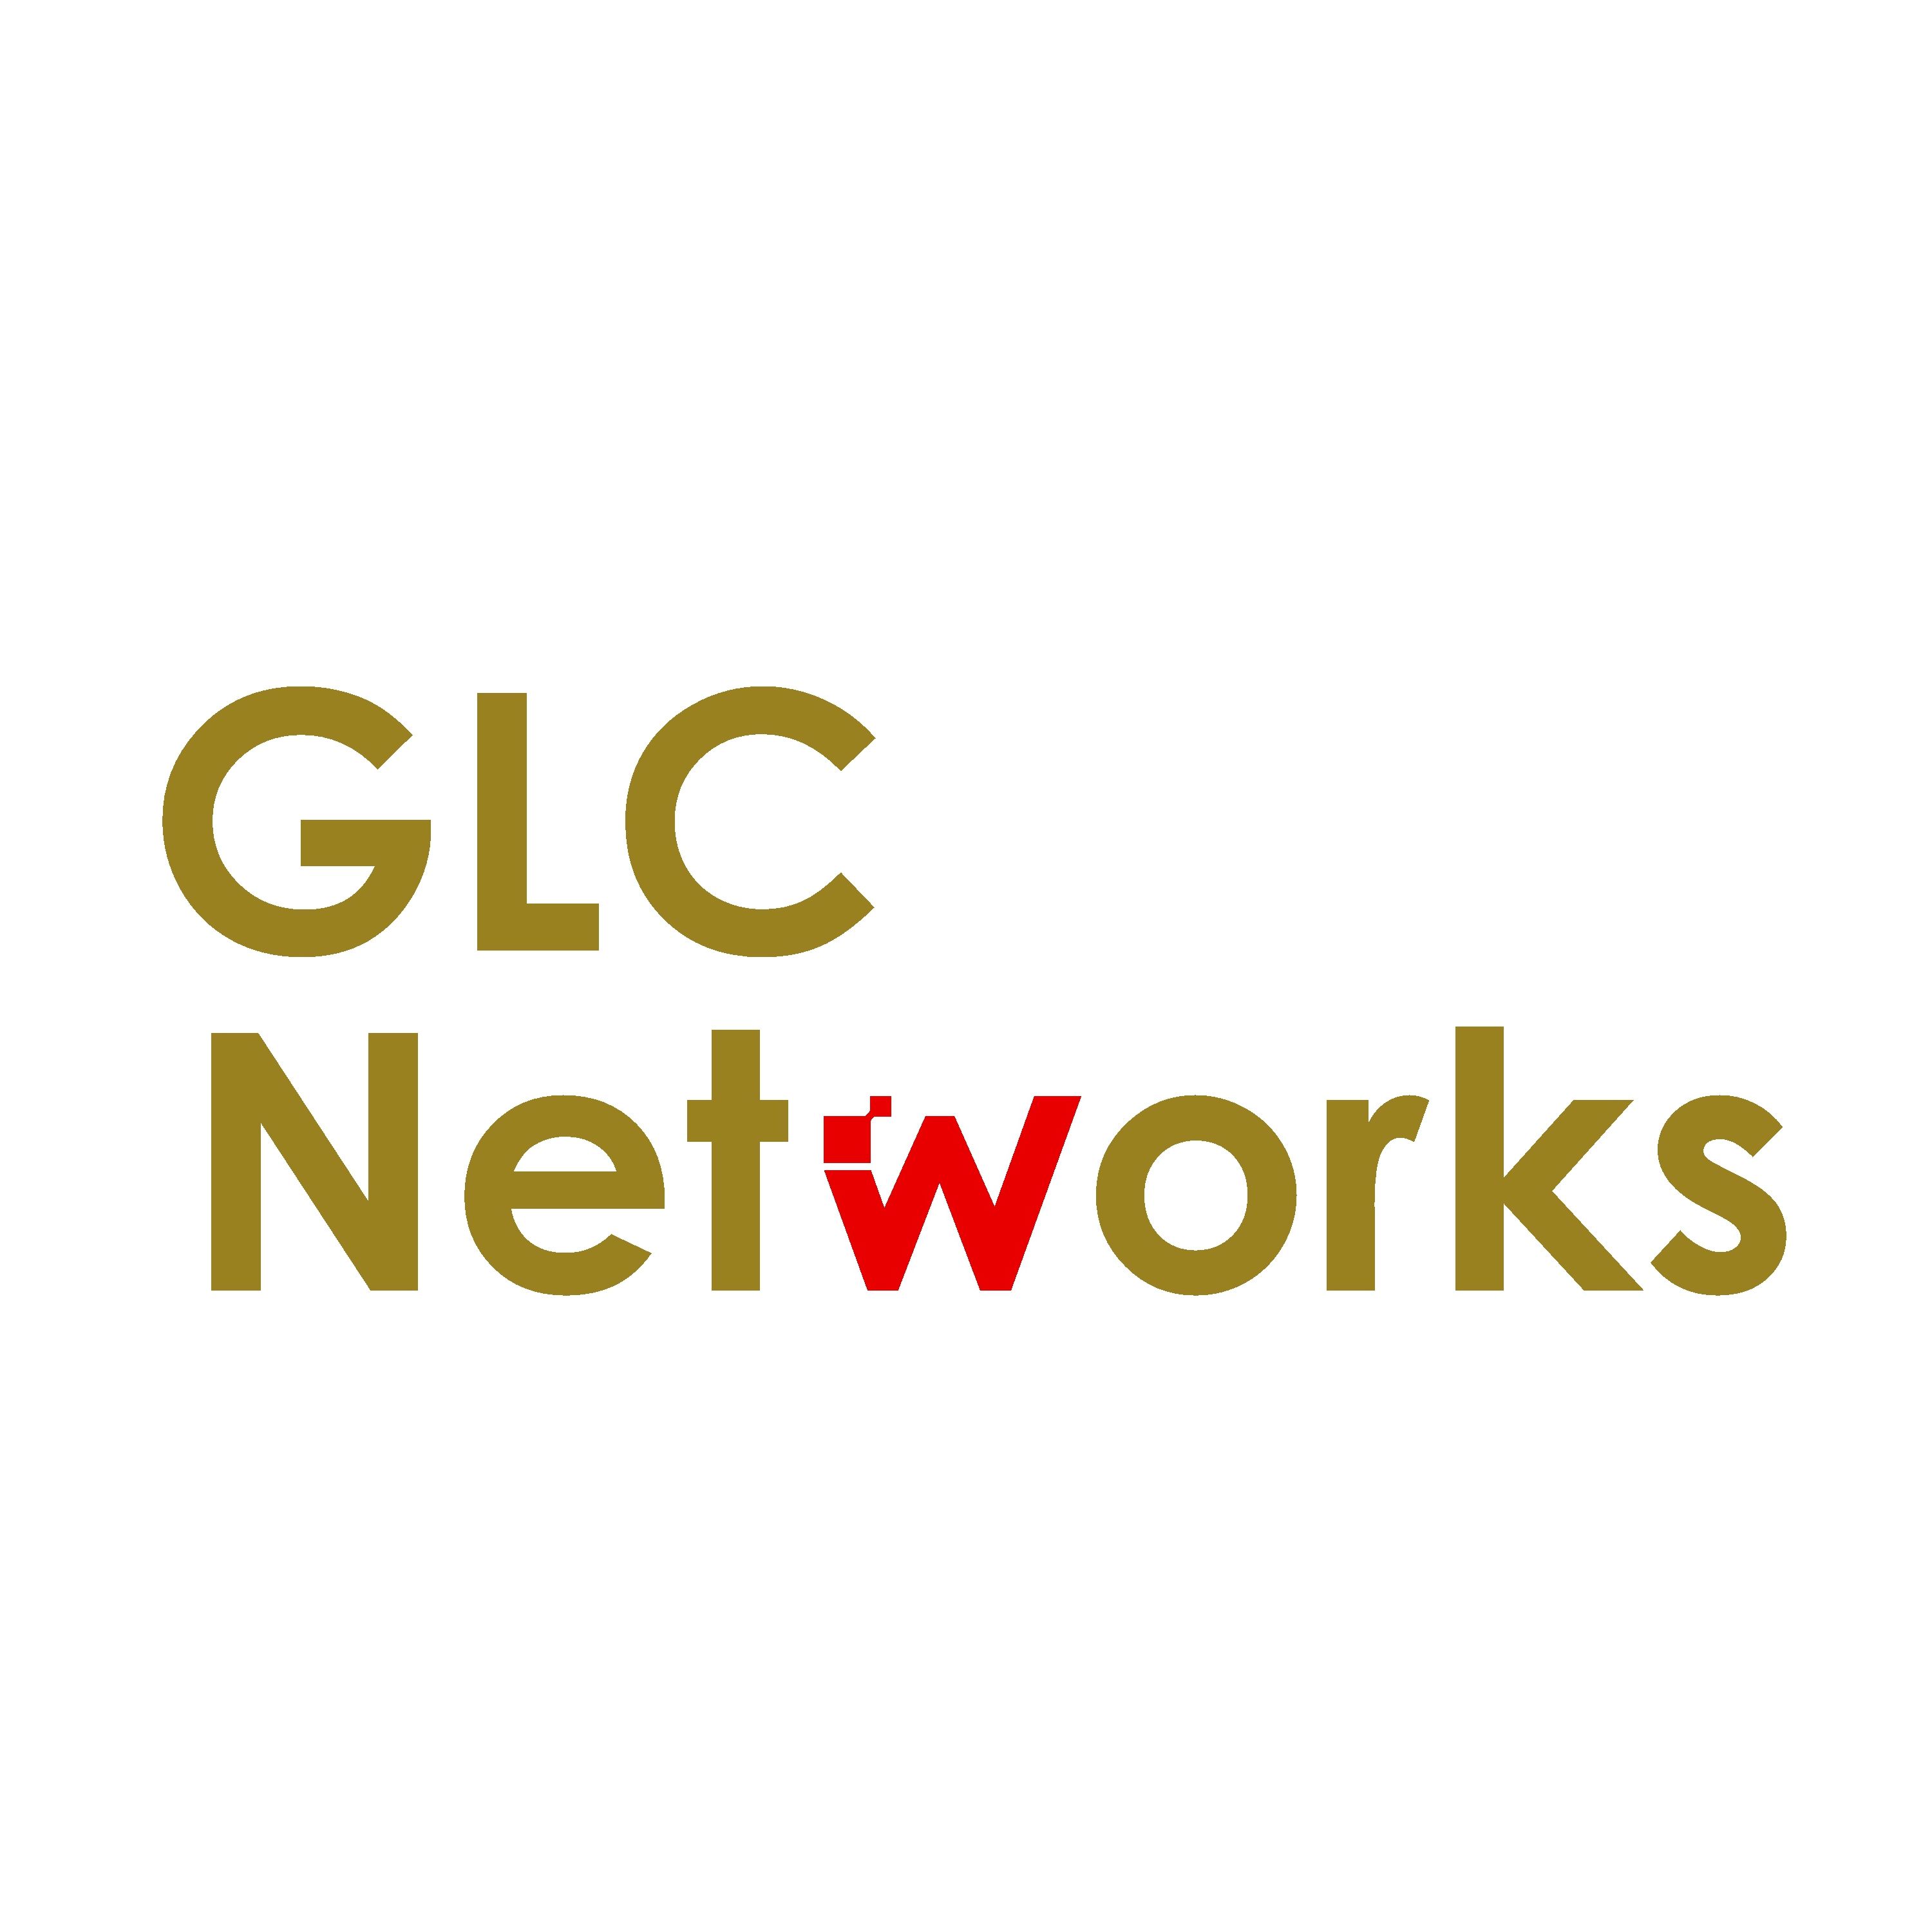 Glc Networks